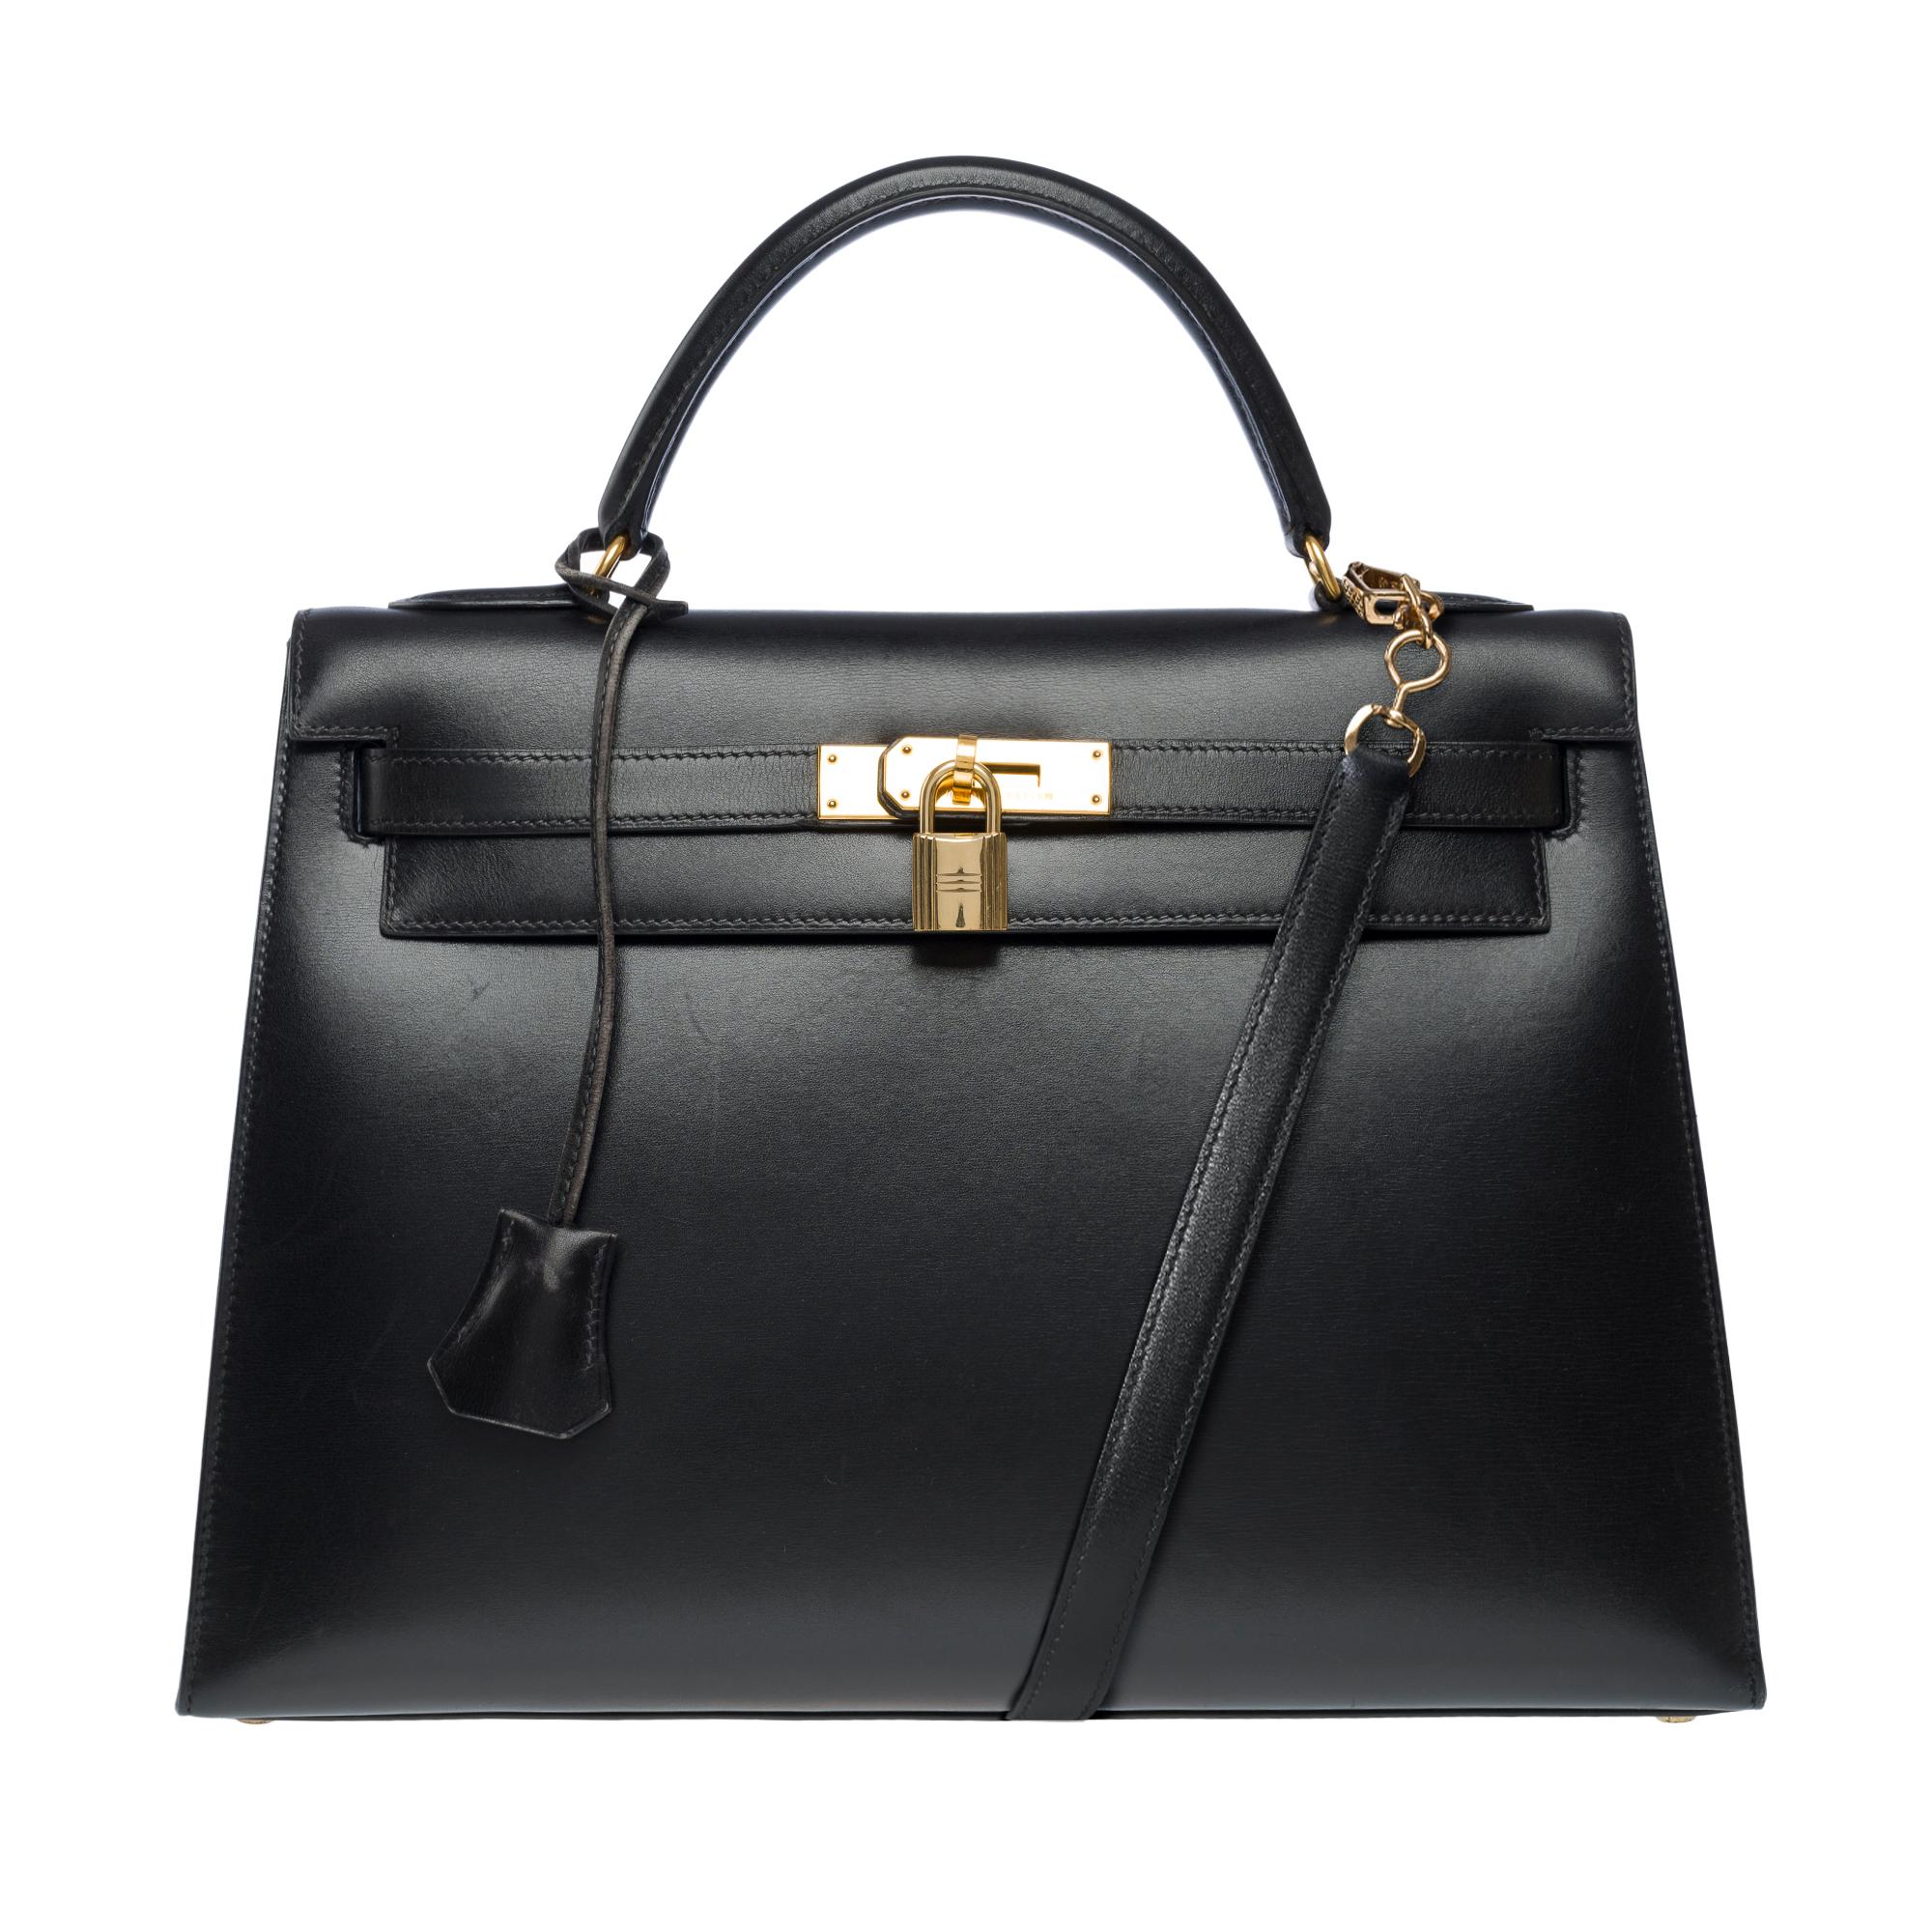 Orange Vintage Hermès Kelly 32 sellier handbag strap in Black Box Calf leather, GHW